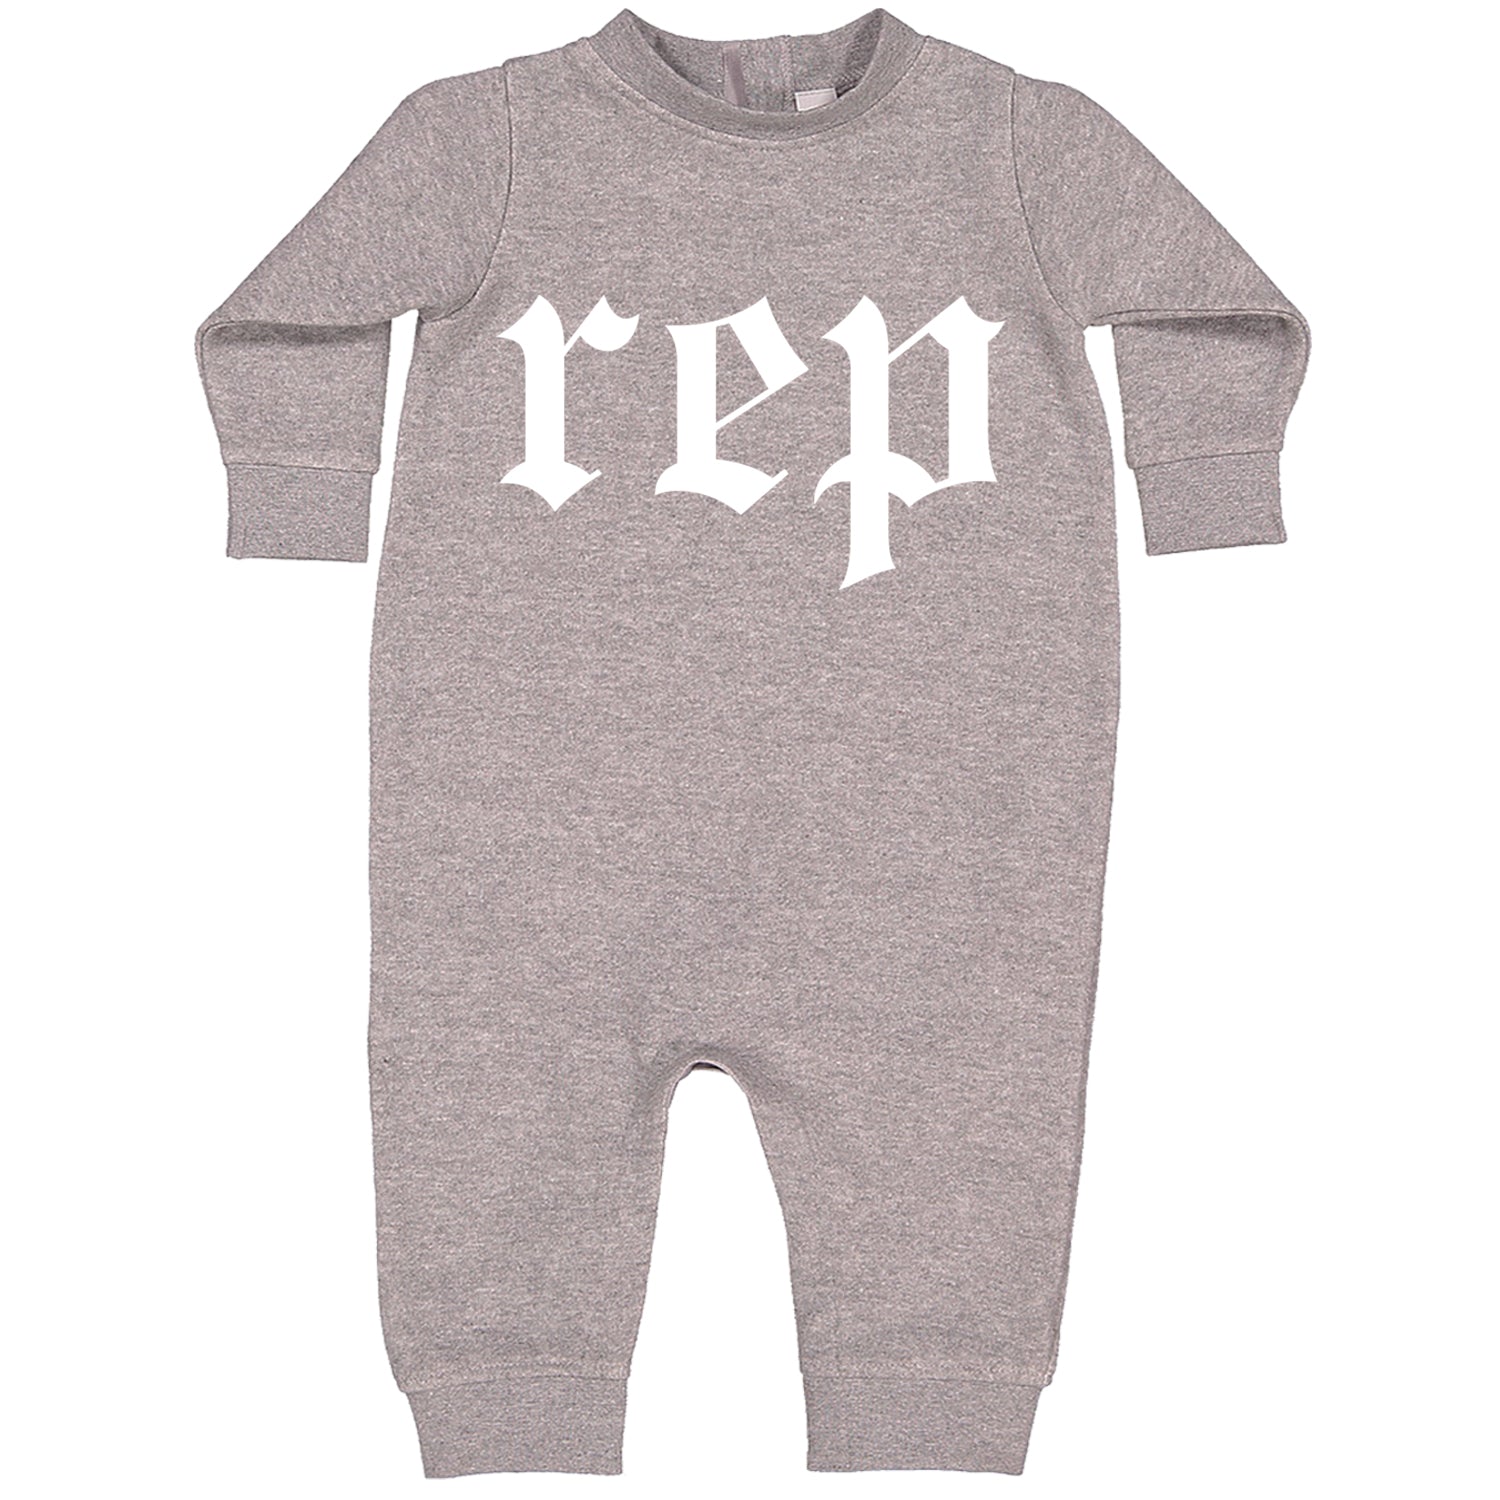 REP Reputation Eras Music Lover Gift Fan Favorite Toddler Hoodie And Infant Fleece Romper Heather Grey